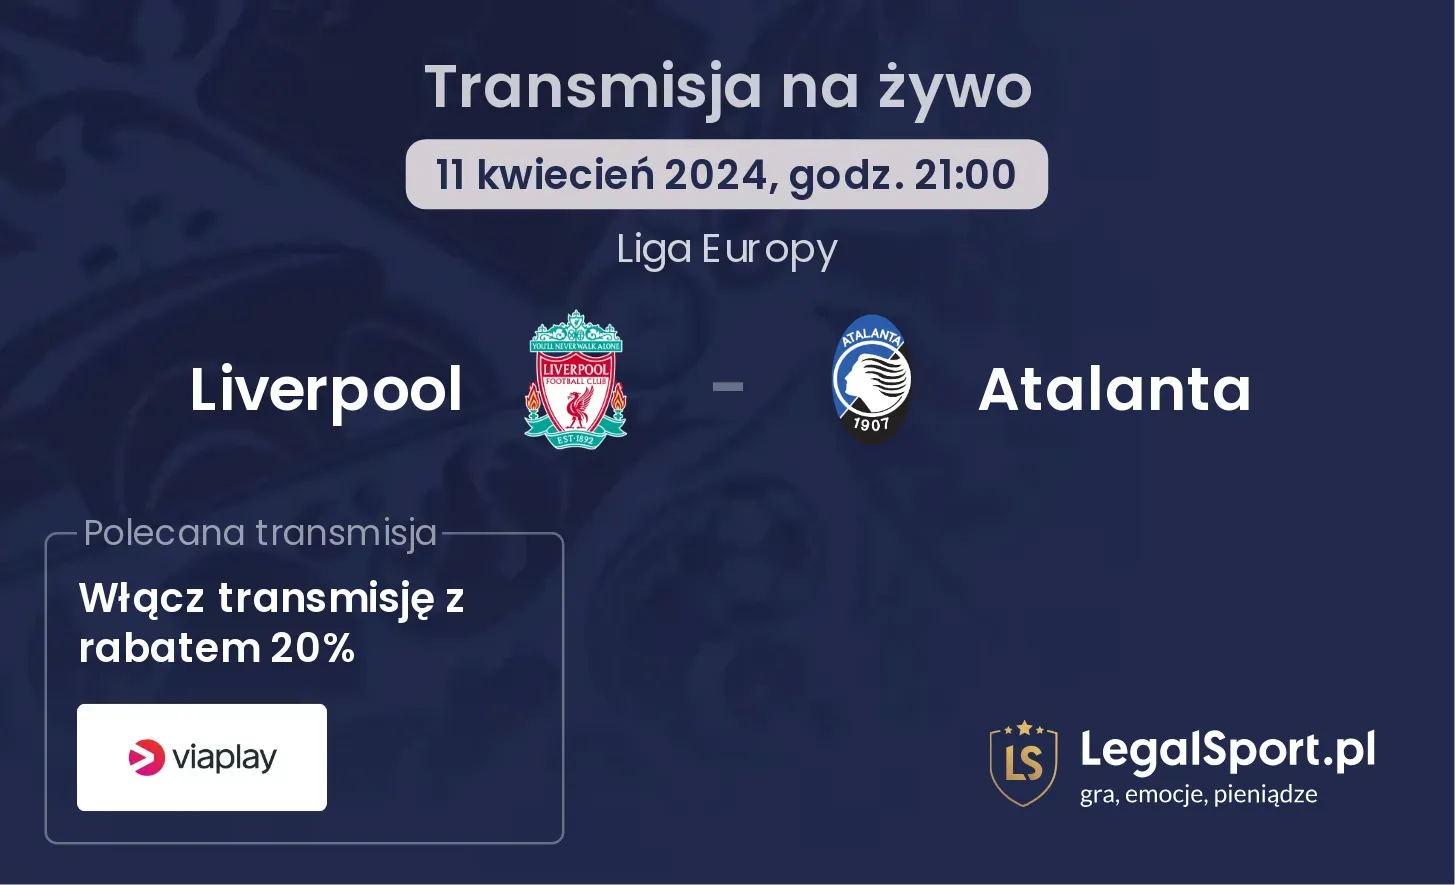 Liverpool - Atalanta transmisja na żywo